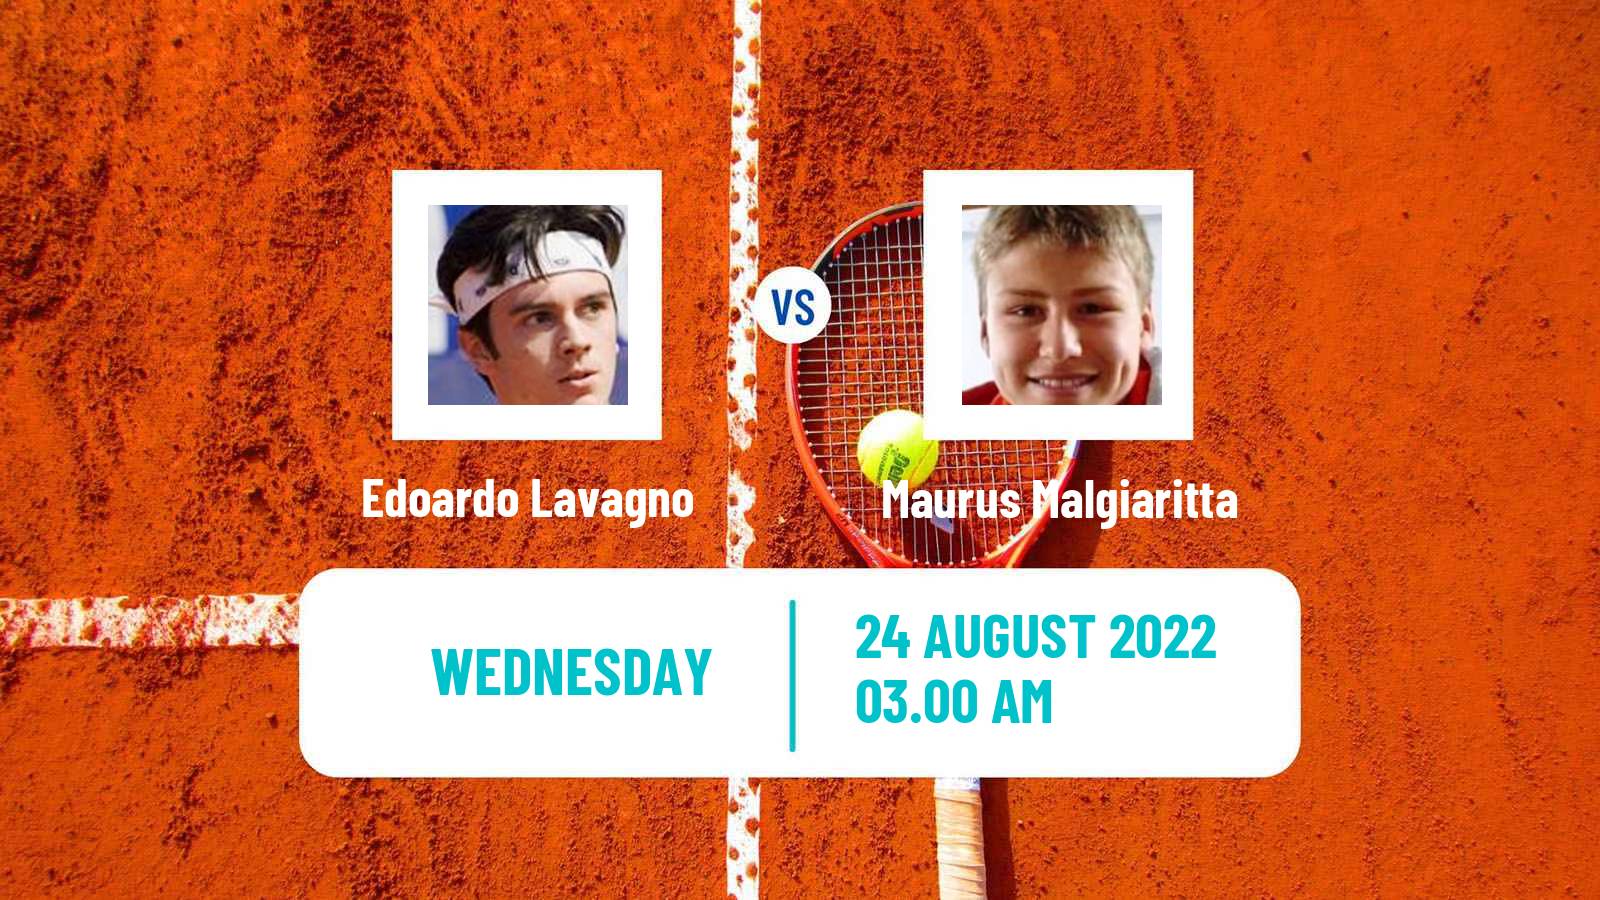 Tennis ITF Tournaments Edoardo Lavagno - Maurus Malgiaritta